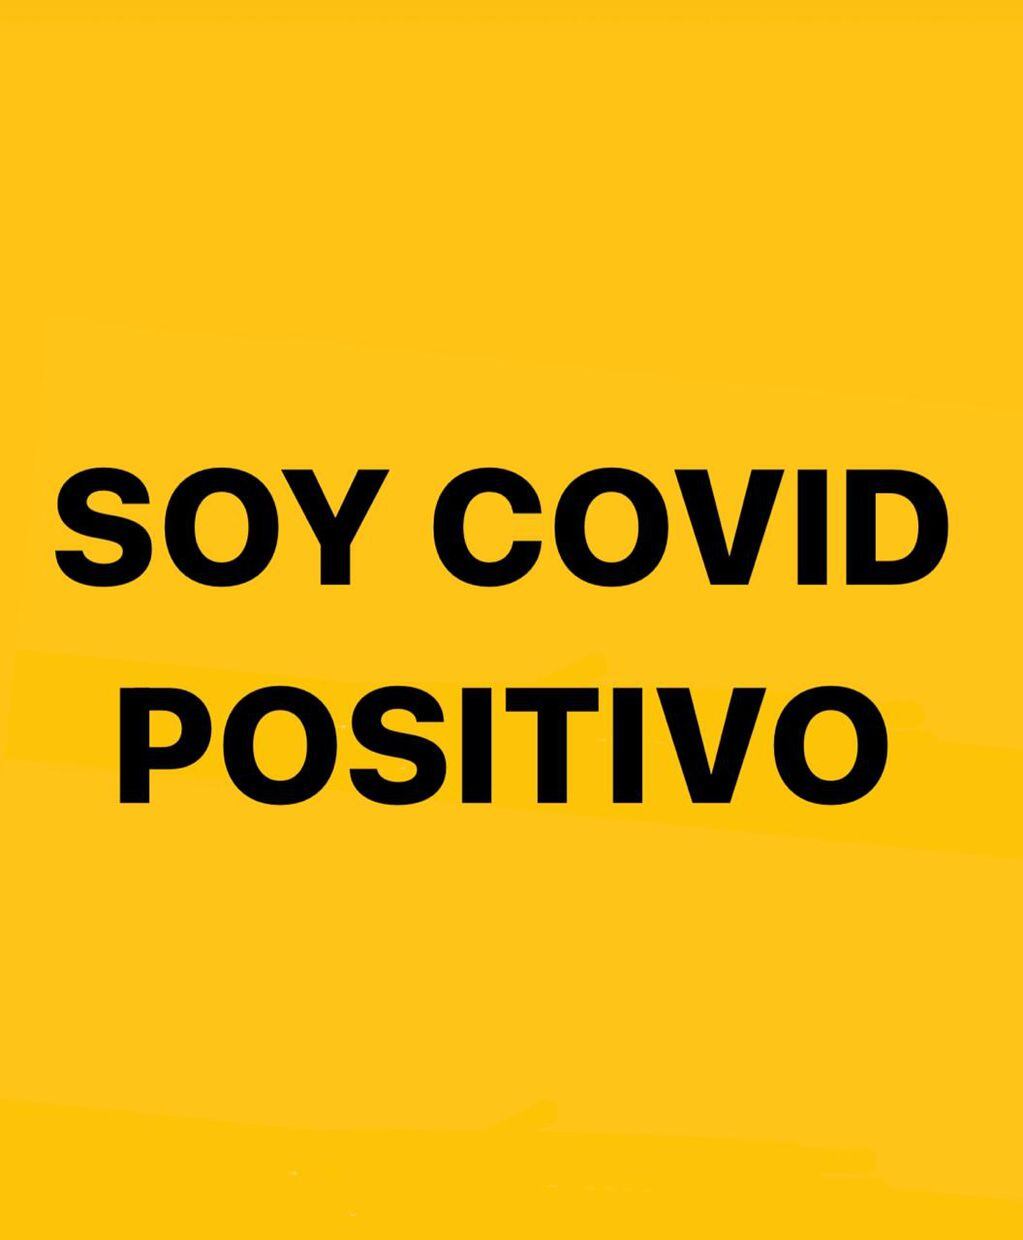 Oficial Gordillo: “soy Covid positivo”